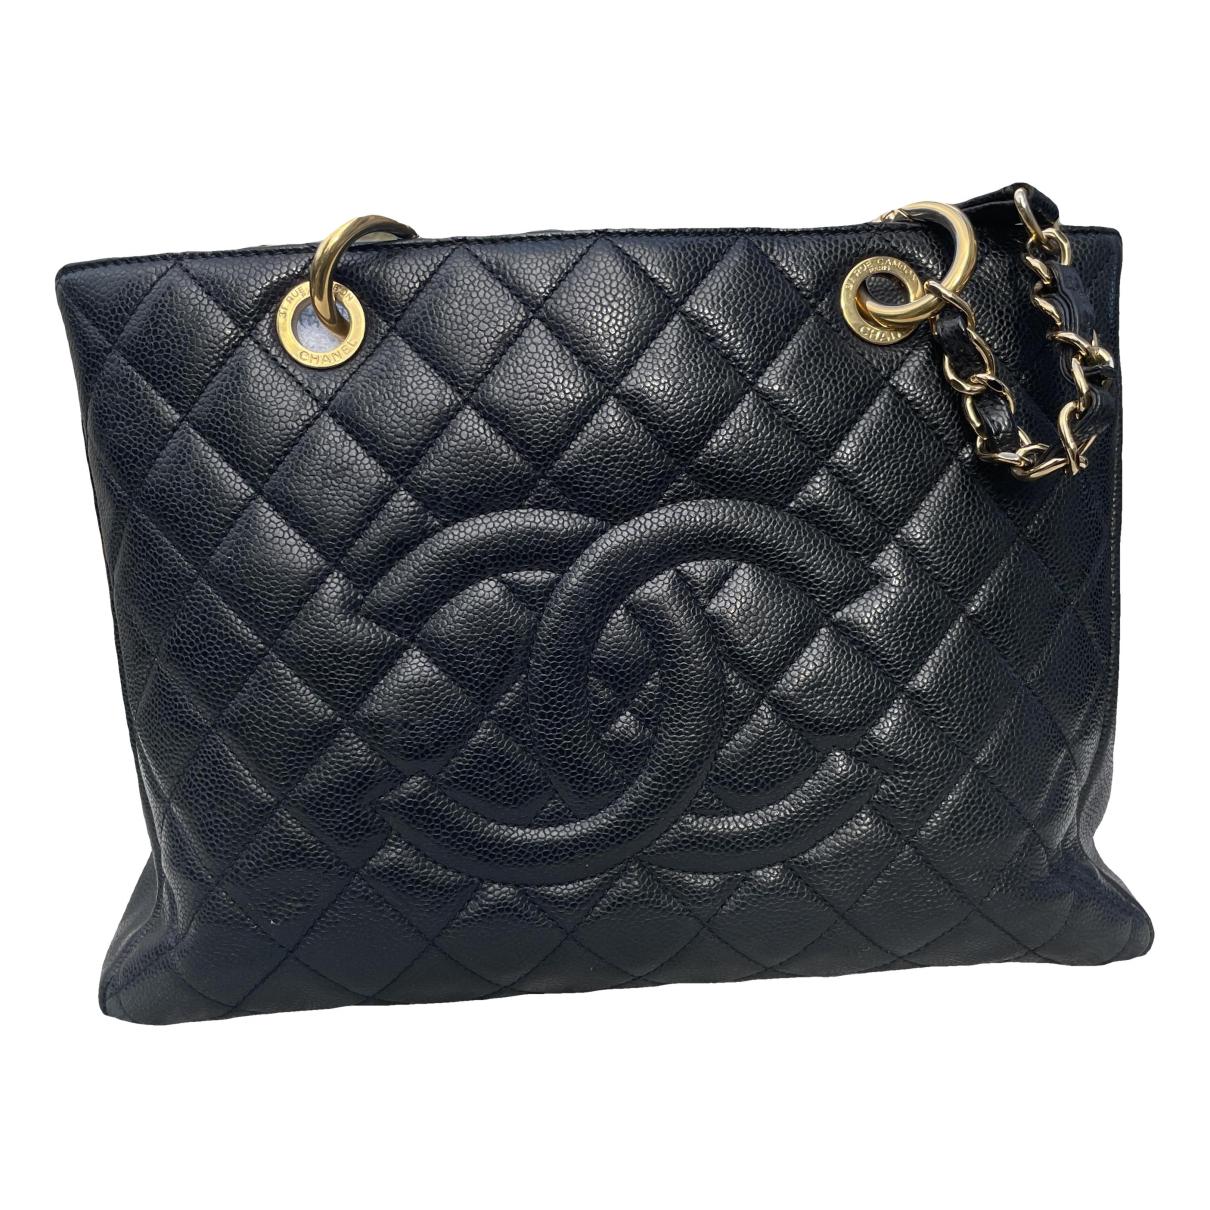 Grand shopping leather handbag